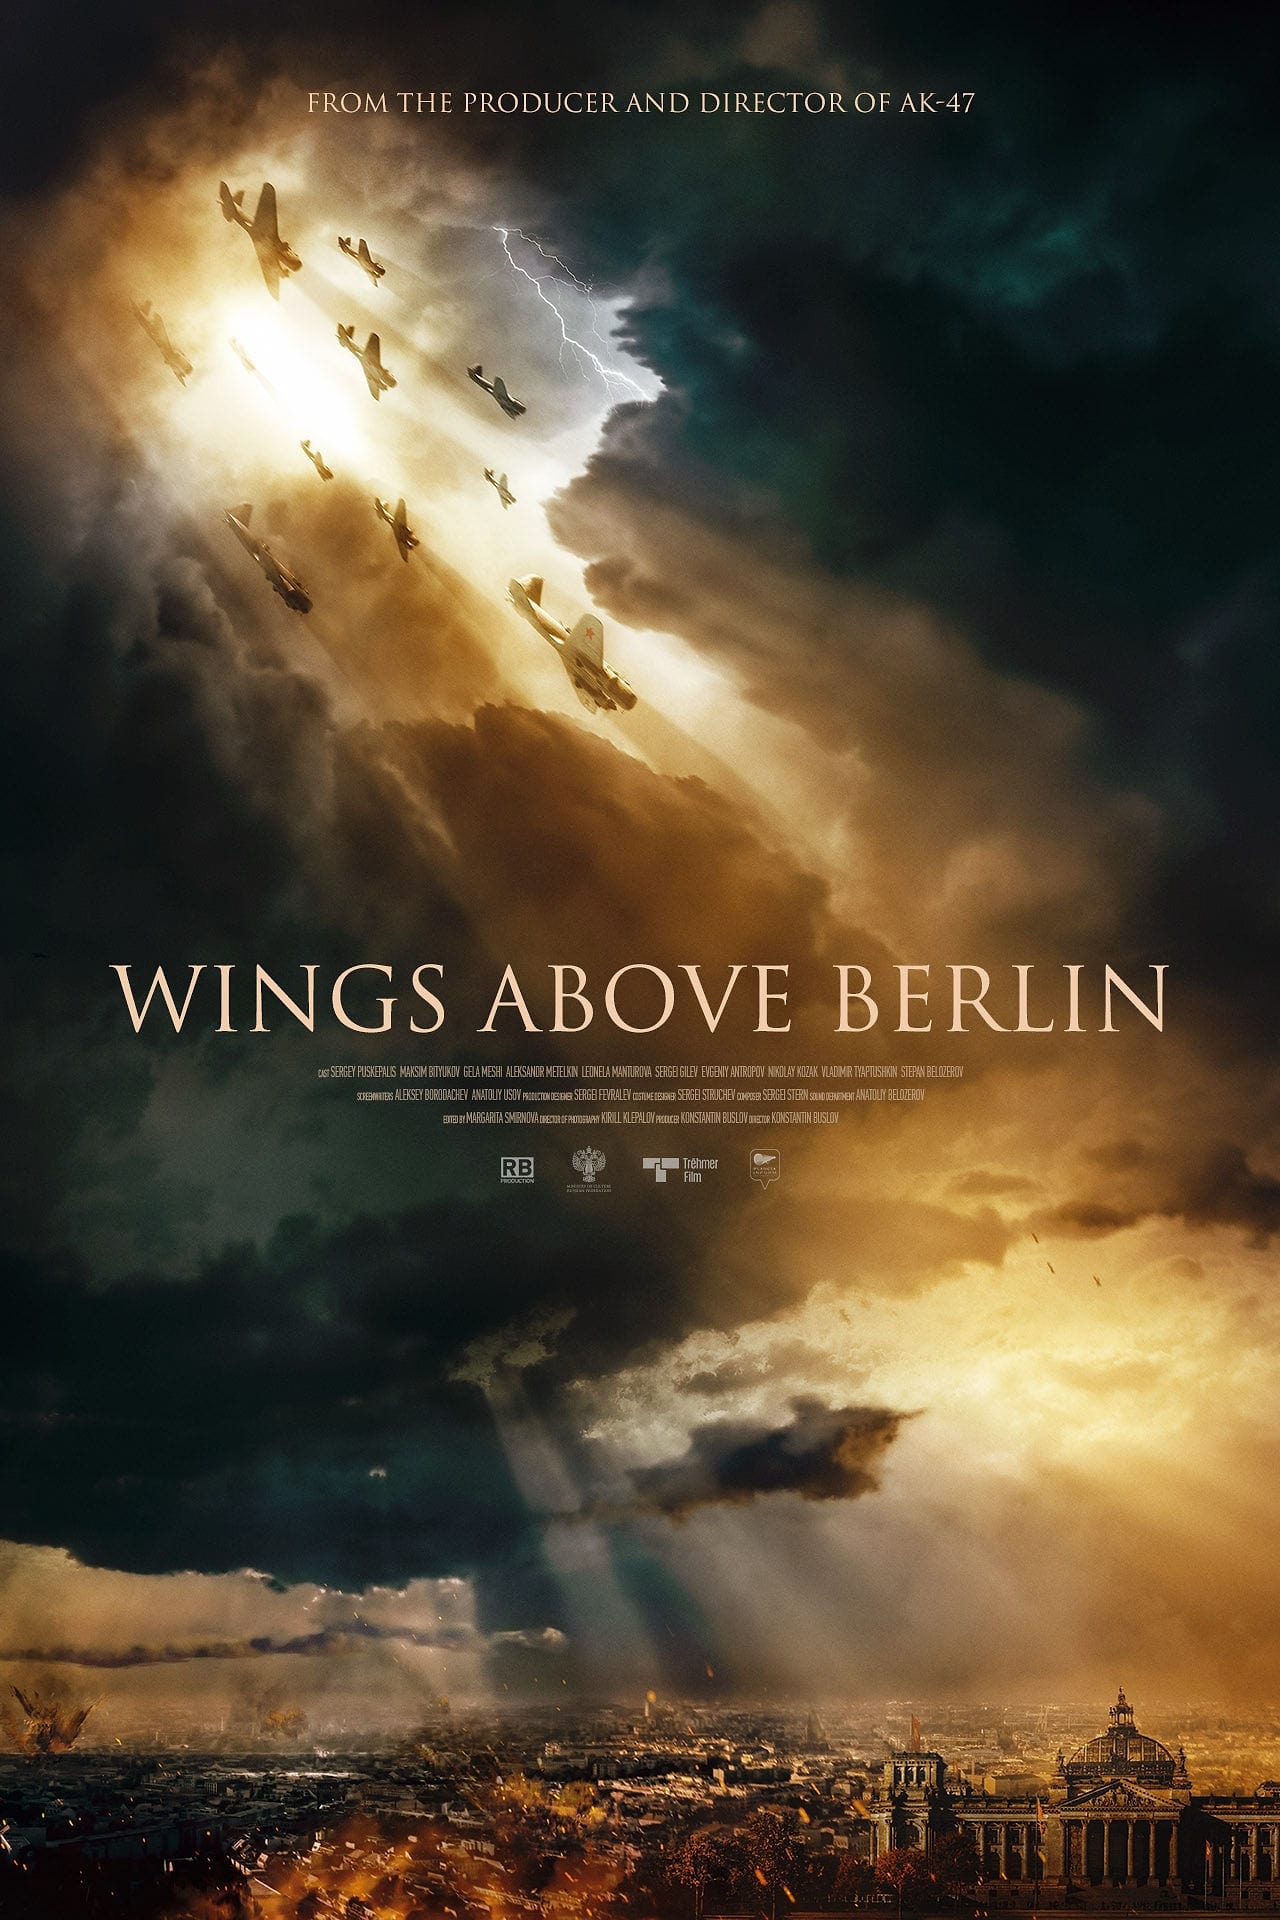 Plakát pro film “Krylya nad Berlinom”